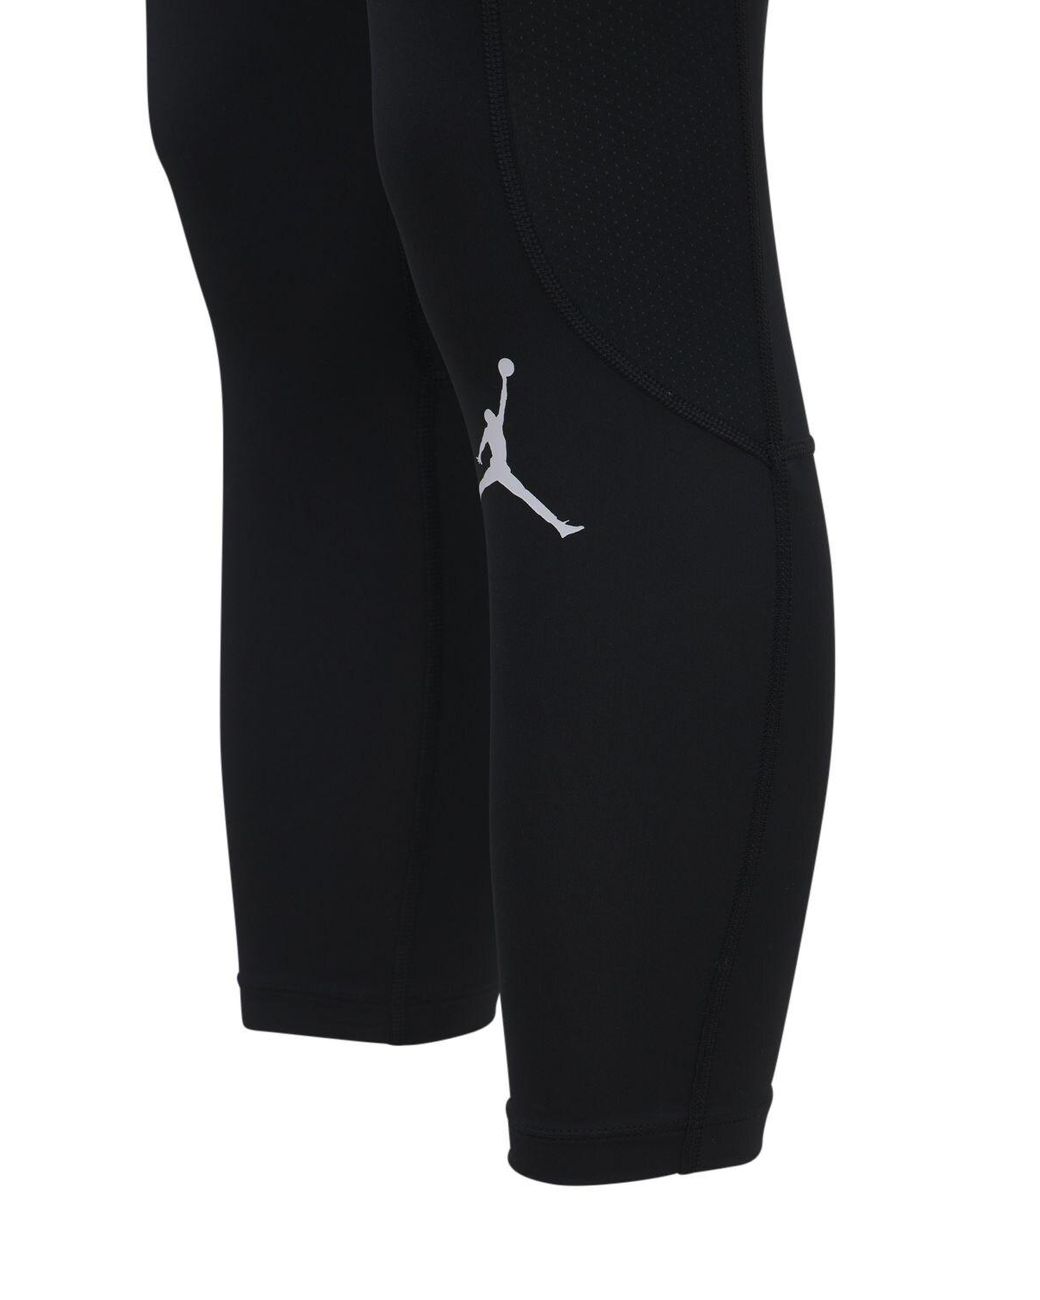 Nike Jordan Dri-fit 23 Alpha 3/4 Training Tights in White for Men